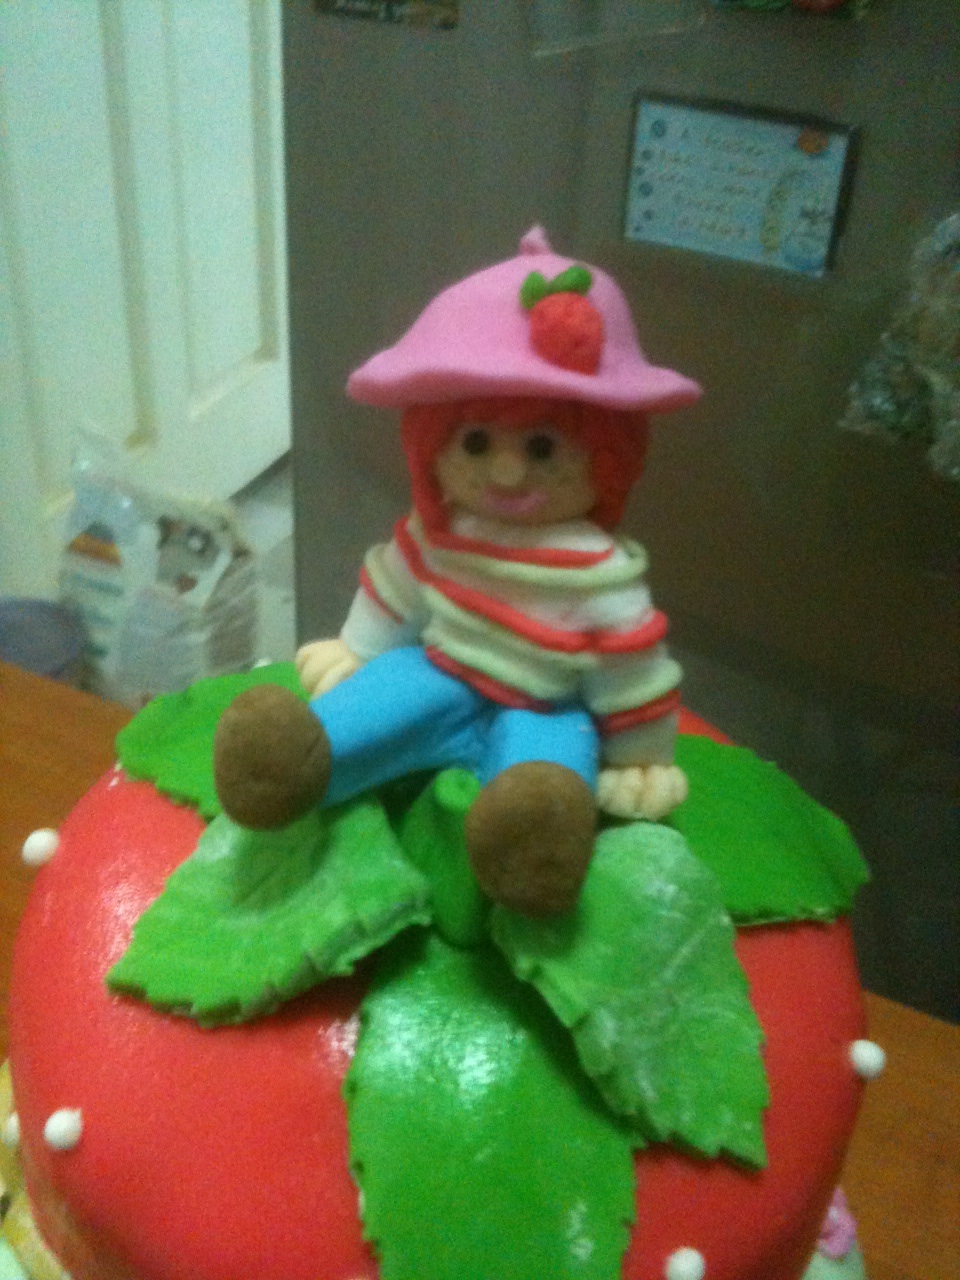 strawberry bday cake